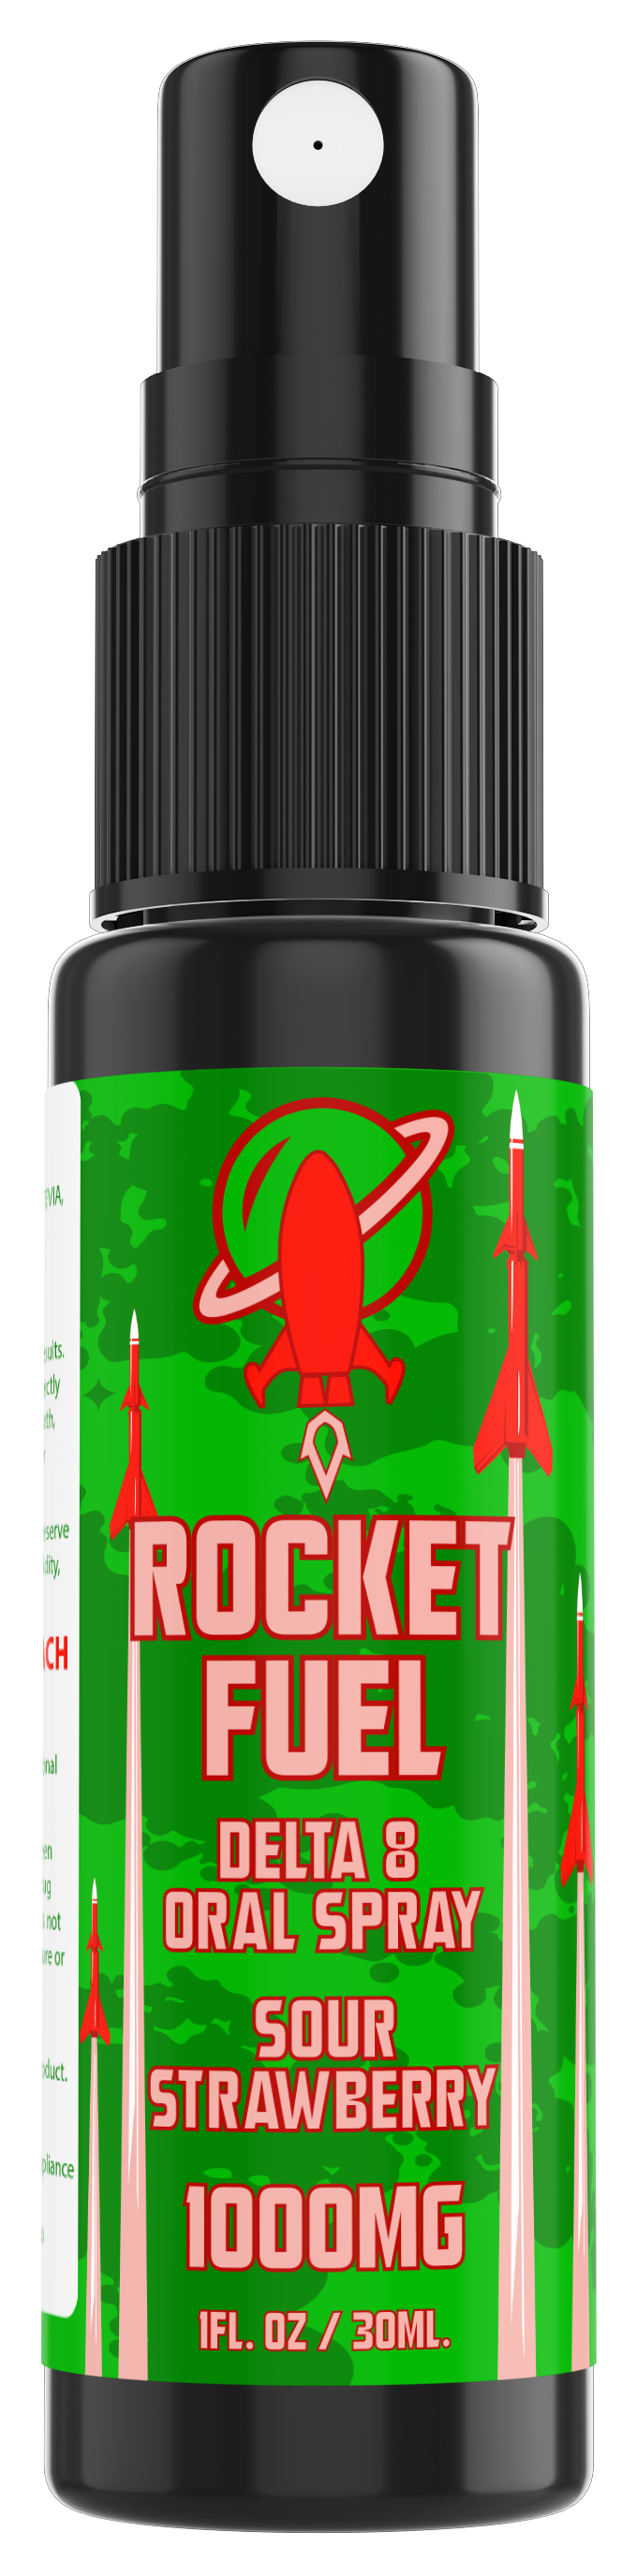 Master mock up d8flight 1000mg d8 oral spray rocket fuel sour strawberry 9 22 22 v2